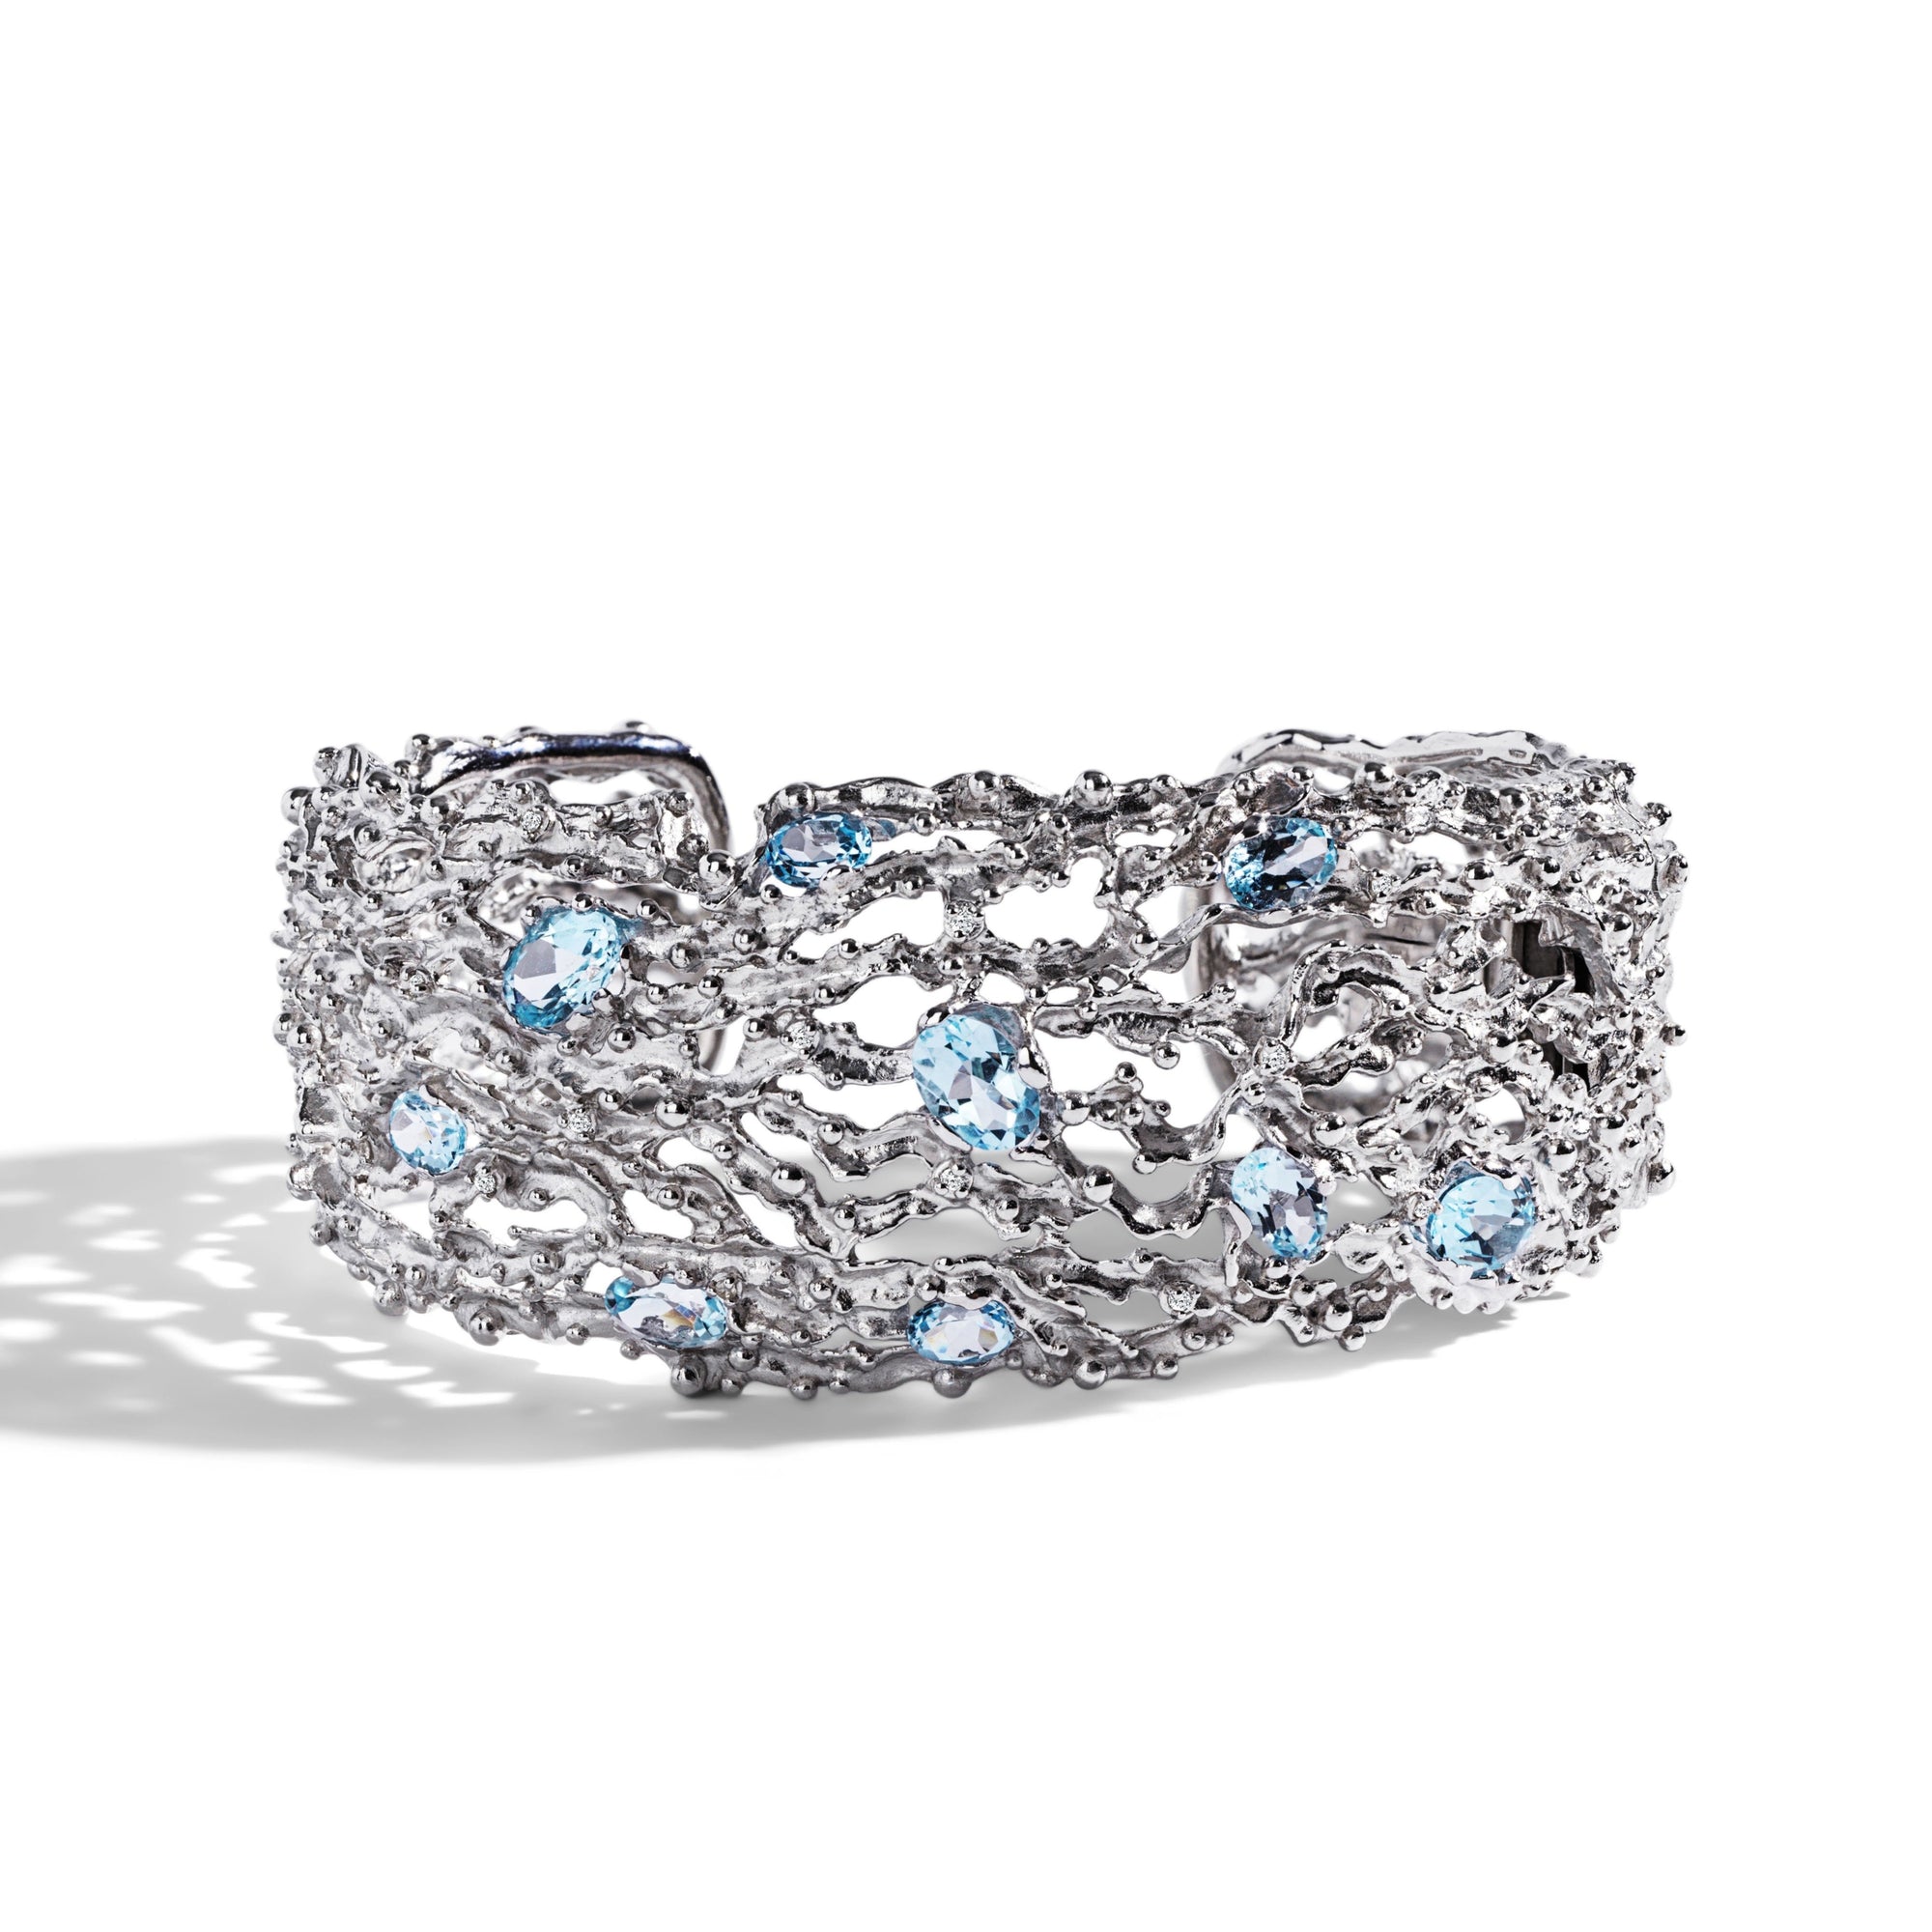 Michael Aram Ocean Cuff Bracelet with Blue Topaz and Diamonds